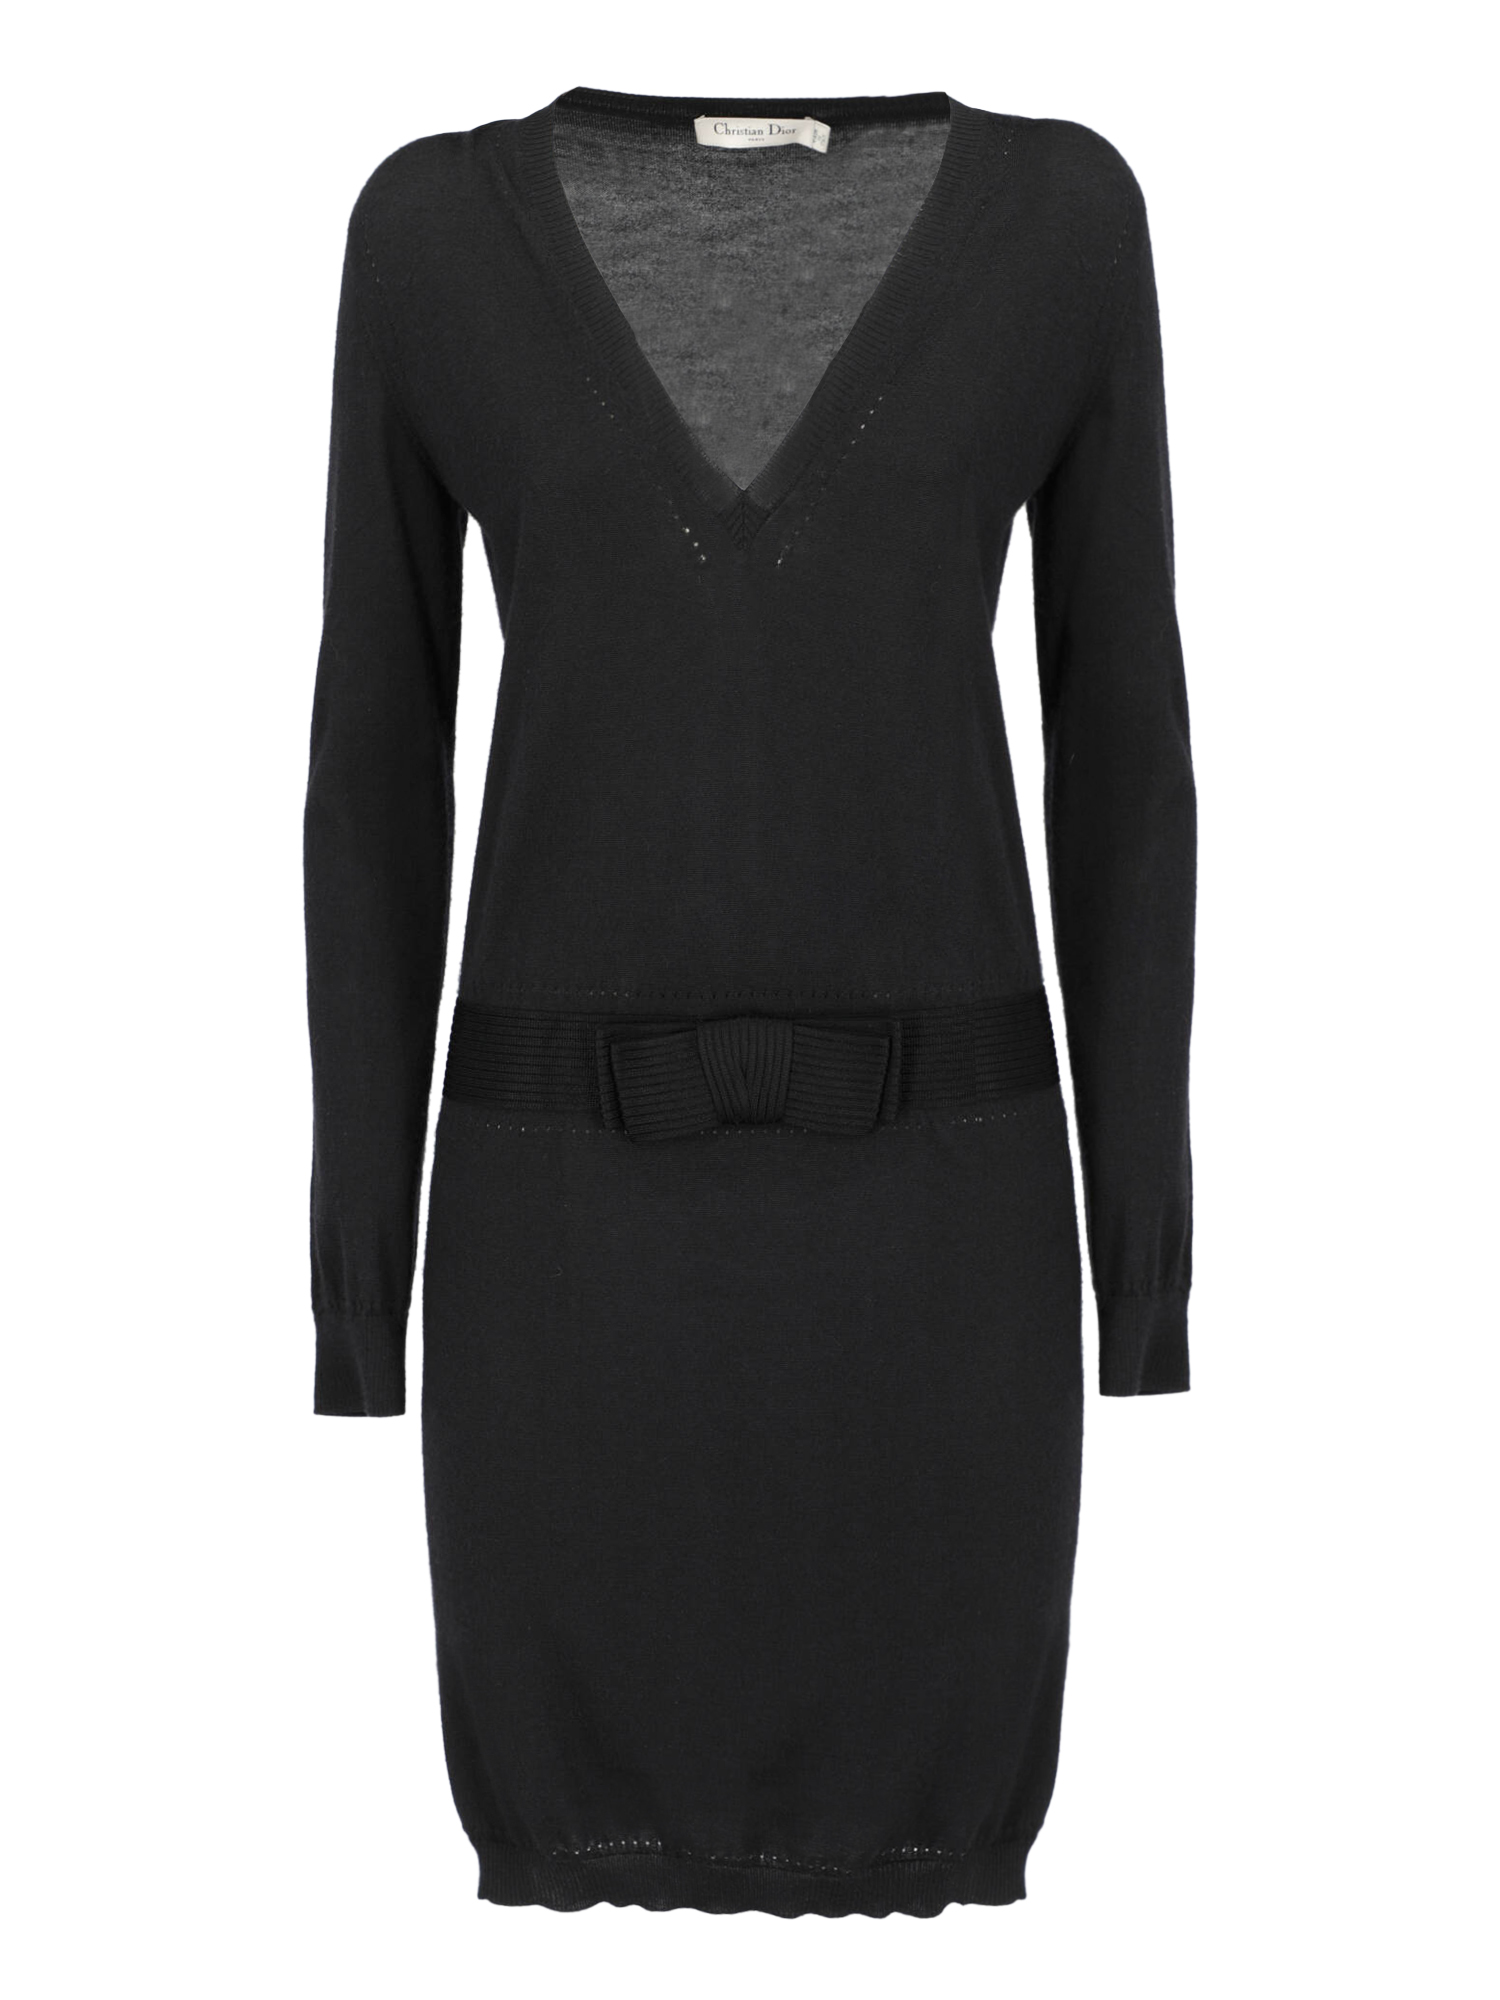 Robes Pour Femme - Dior - En Wool Black - Taille:  -